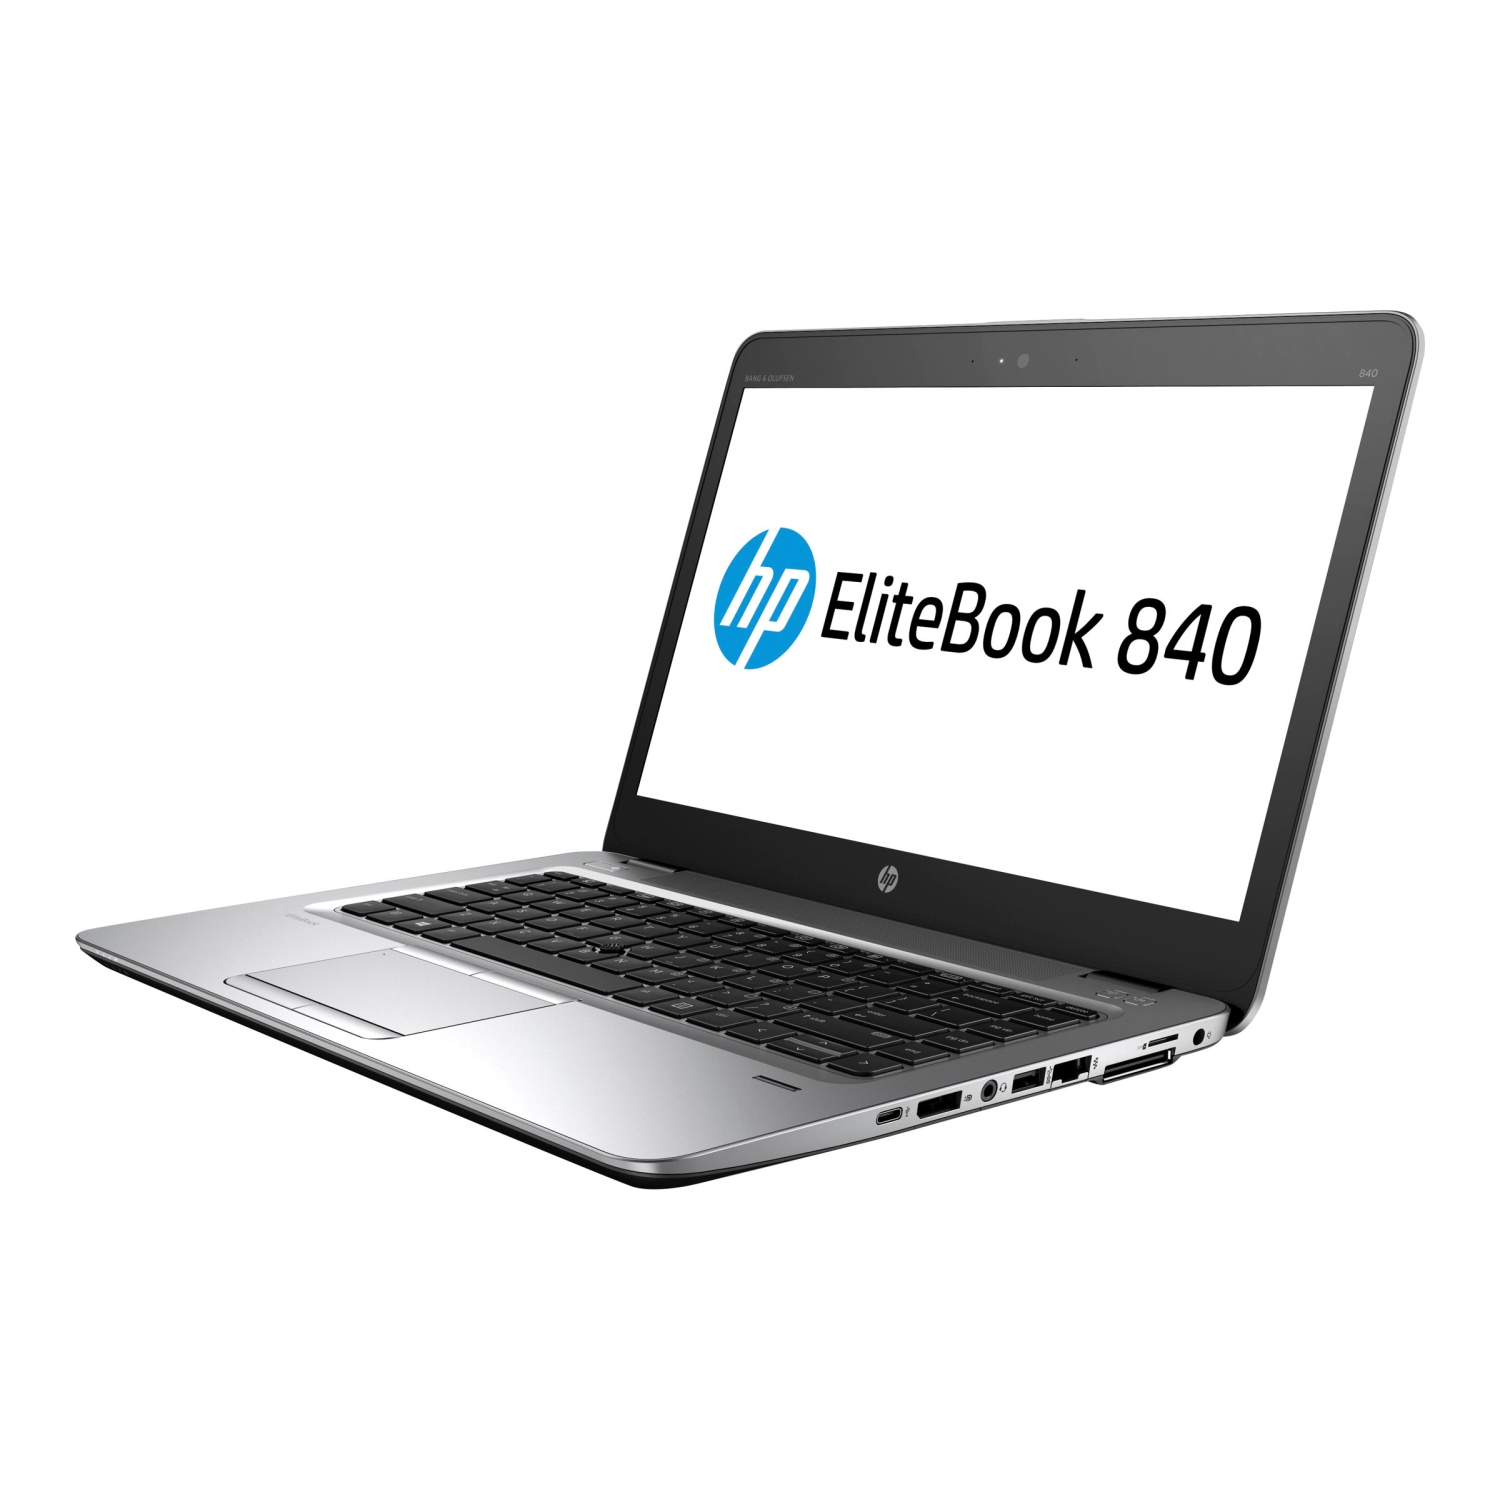 Refurbished (Good) - HP EliteBook 840 G3, i5-6300U, 8GB RAM, 240GB SSD, Webcam, Windows 10 Pro